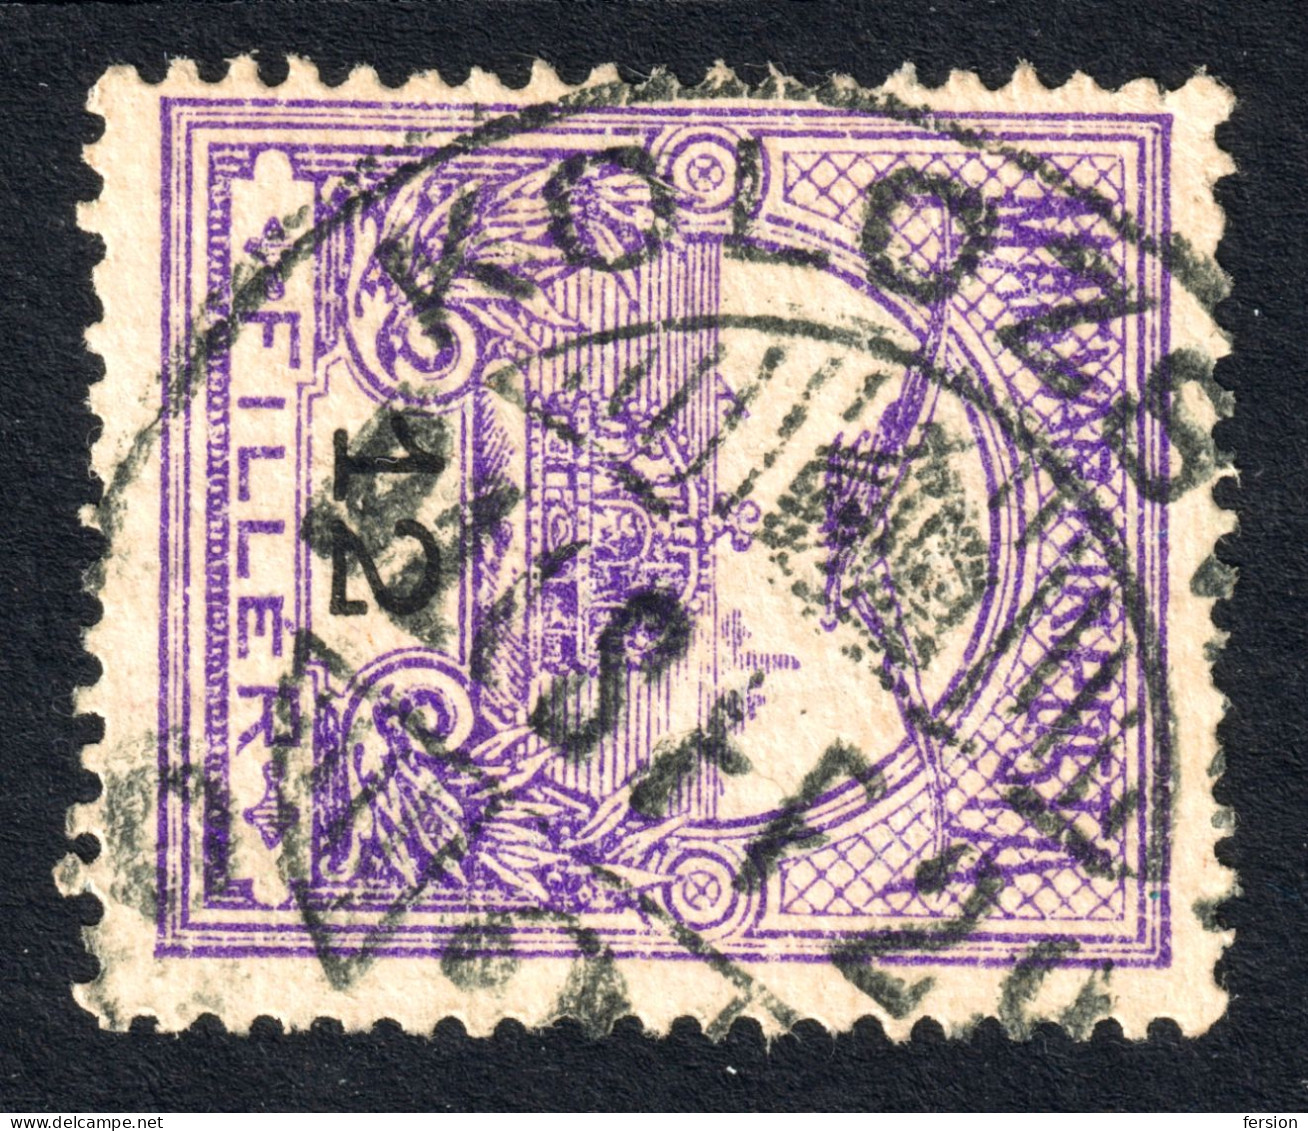 KOLOZSVÁR CLUJ-NAPOCA Postmark / TURUL Crown 1911 Hungary Romania Banat Transylvania KOLOZS County KuK K.u.K - 12 Fill - Transsylvanië